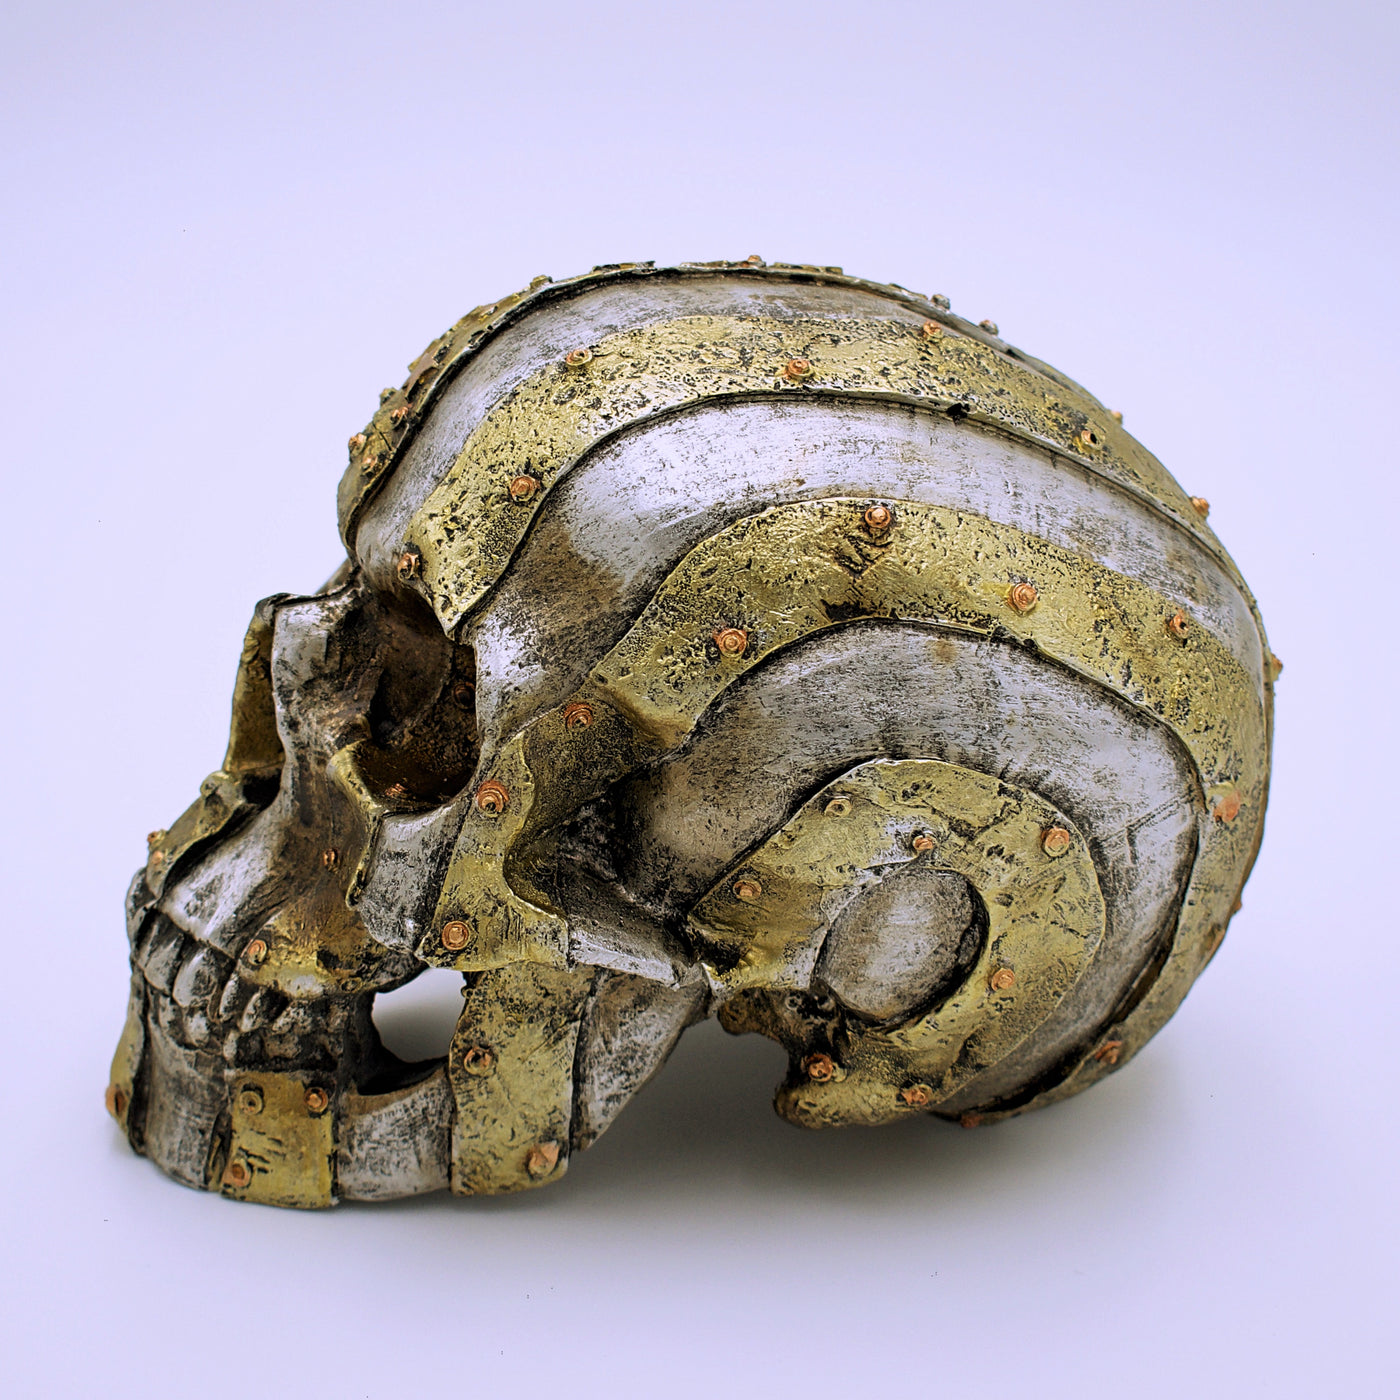 Metallic American Flag Skull Sculpture - The Cranio Collections